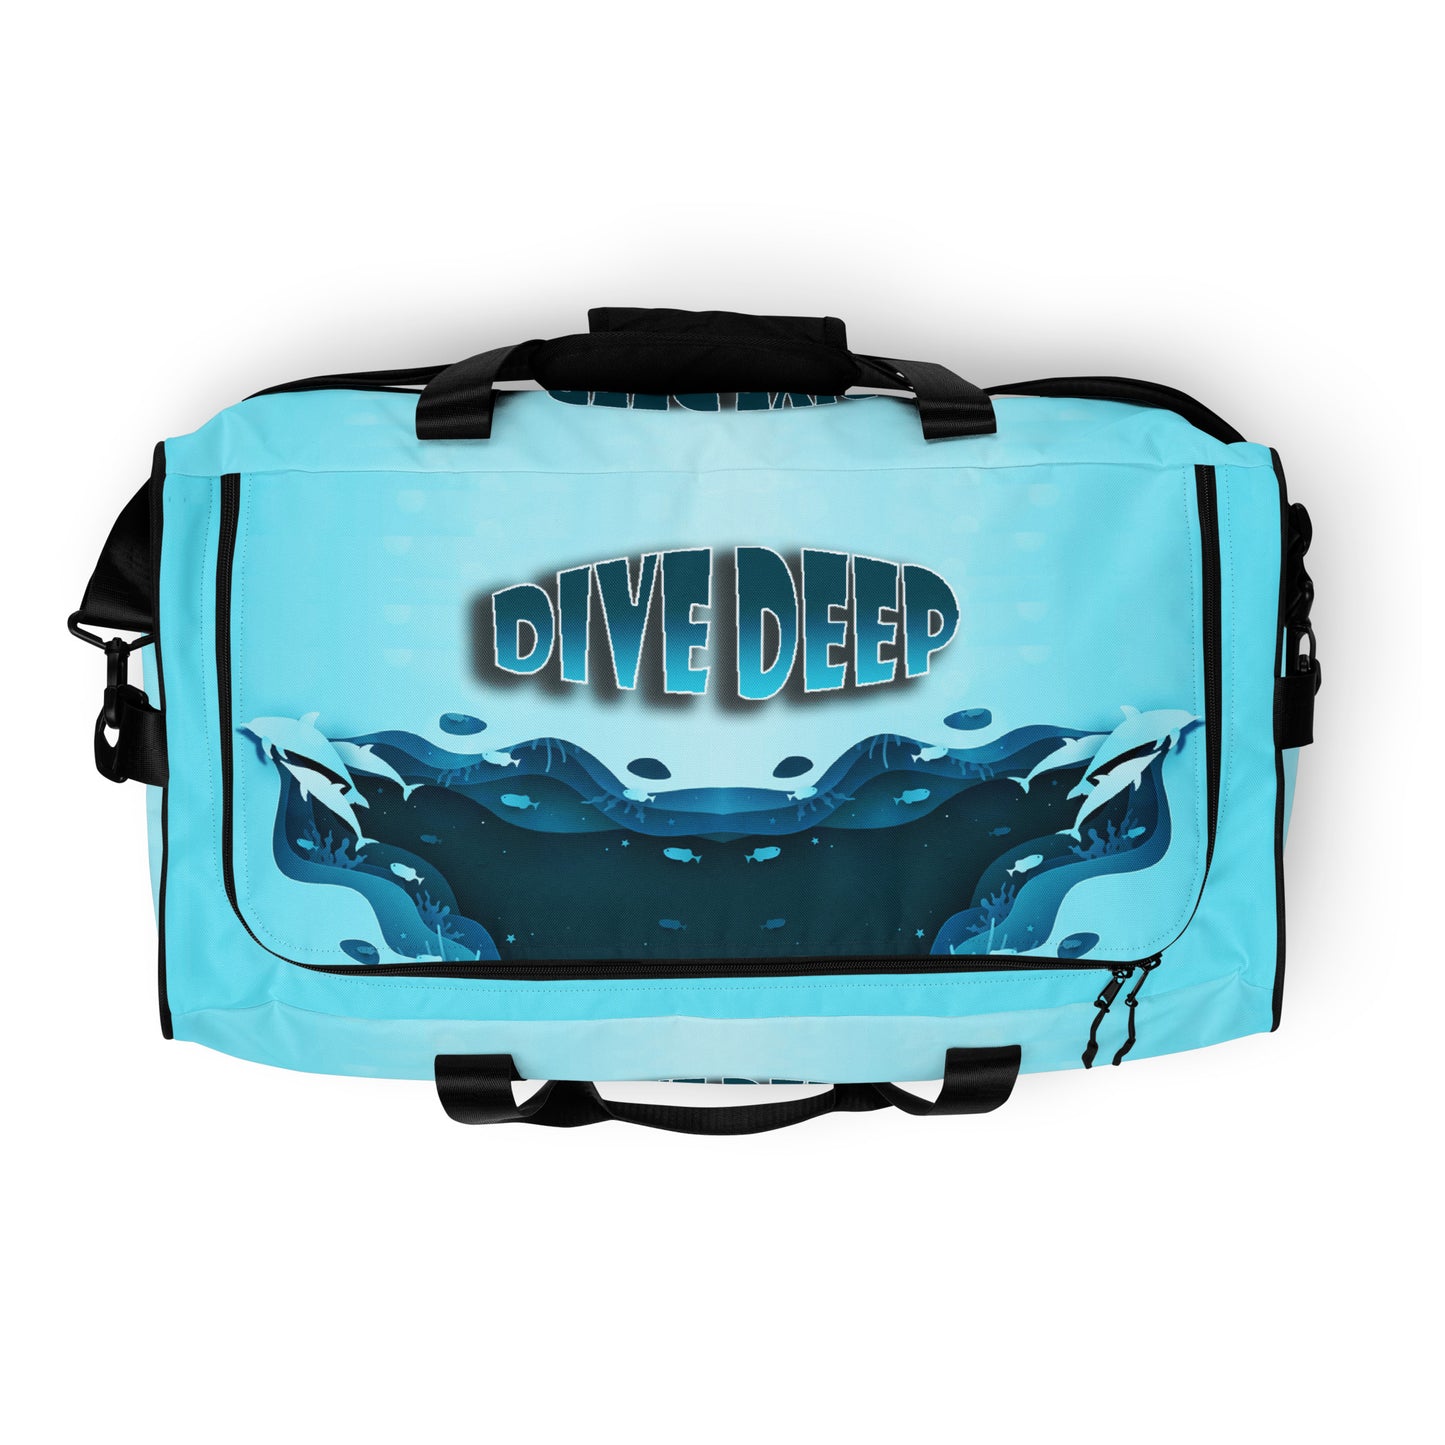 Dive Deep Duffle bag